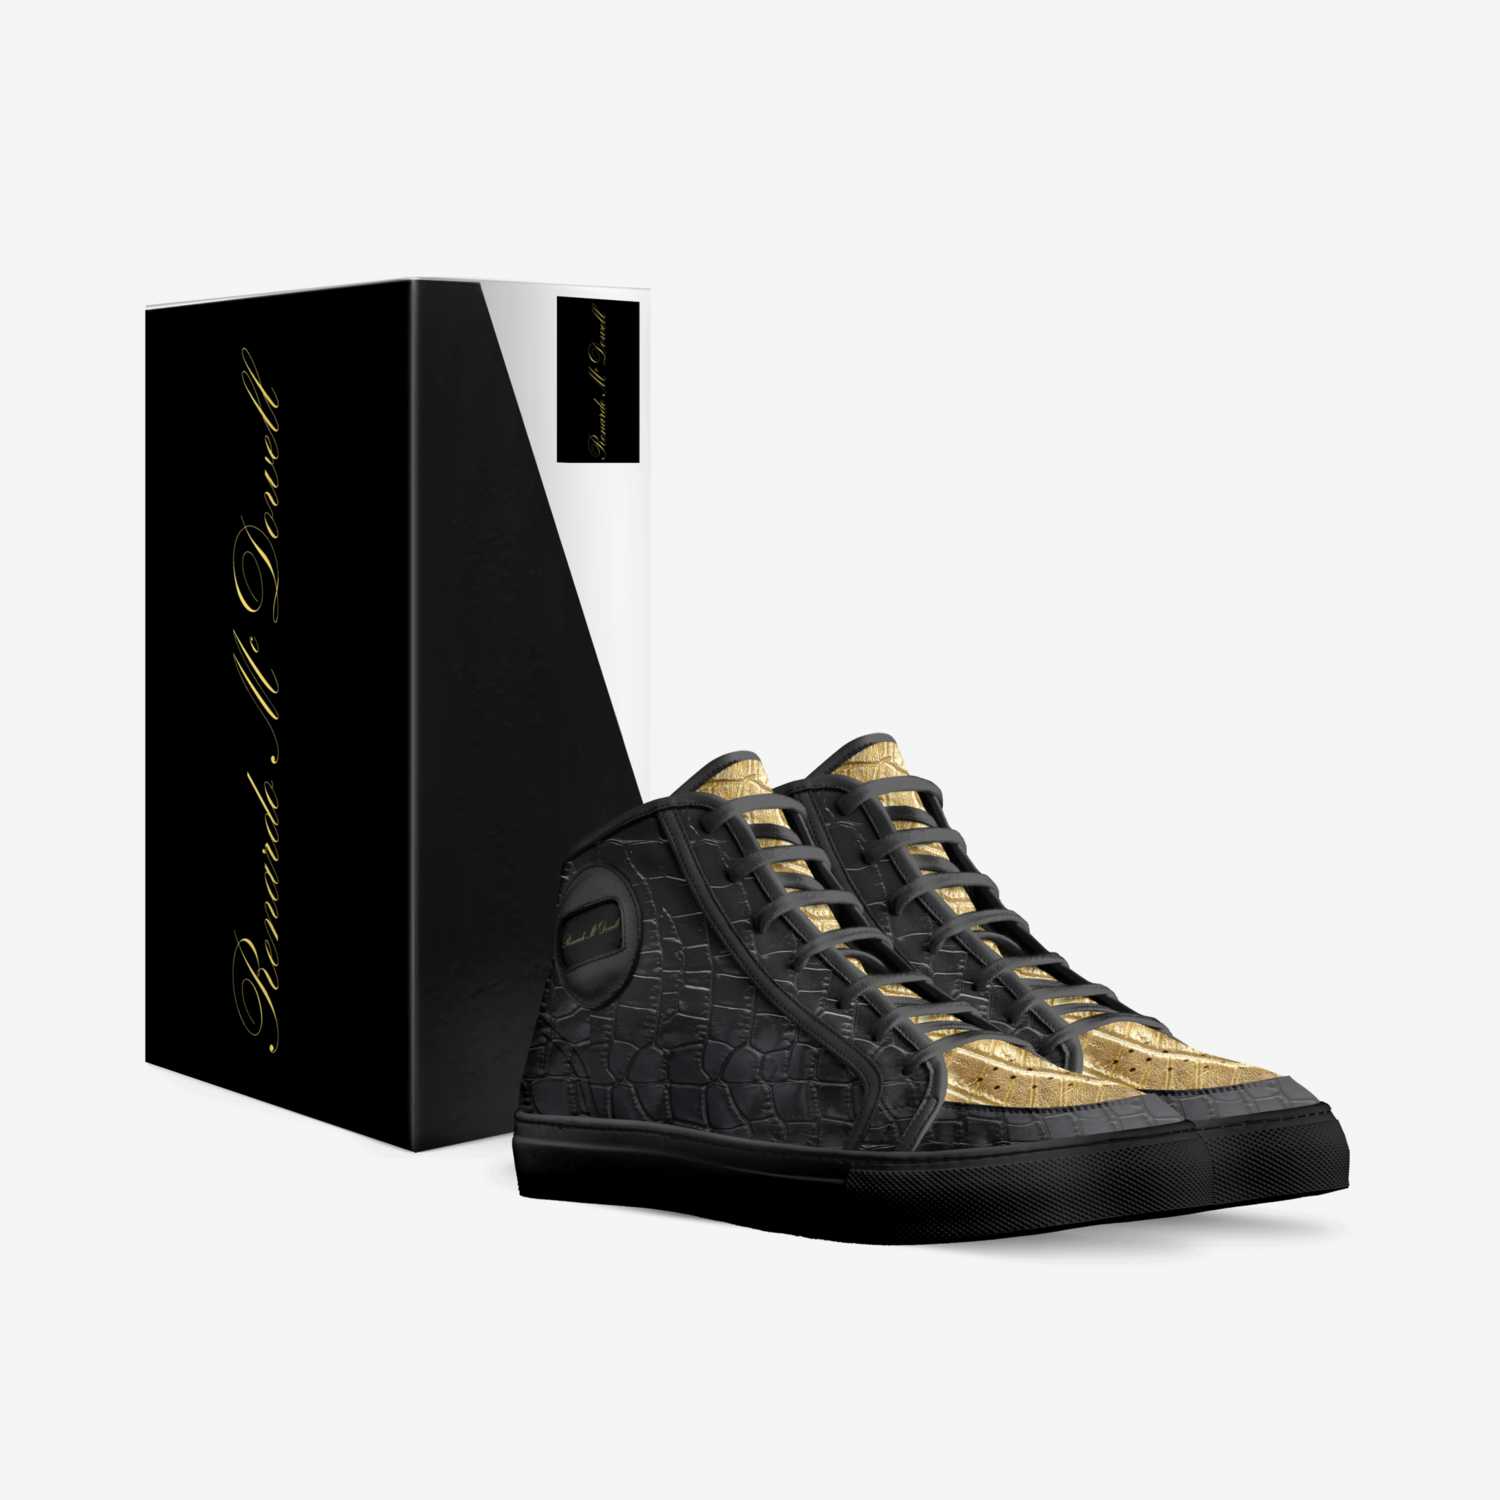 Renardo McDowell custom made in Italy shoes by Erik Mcdowell | Box view